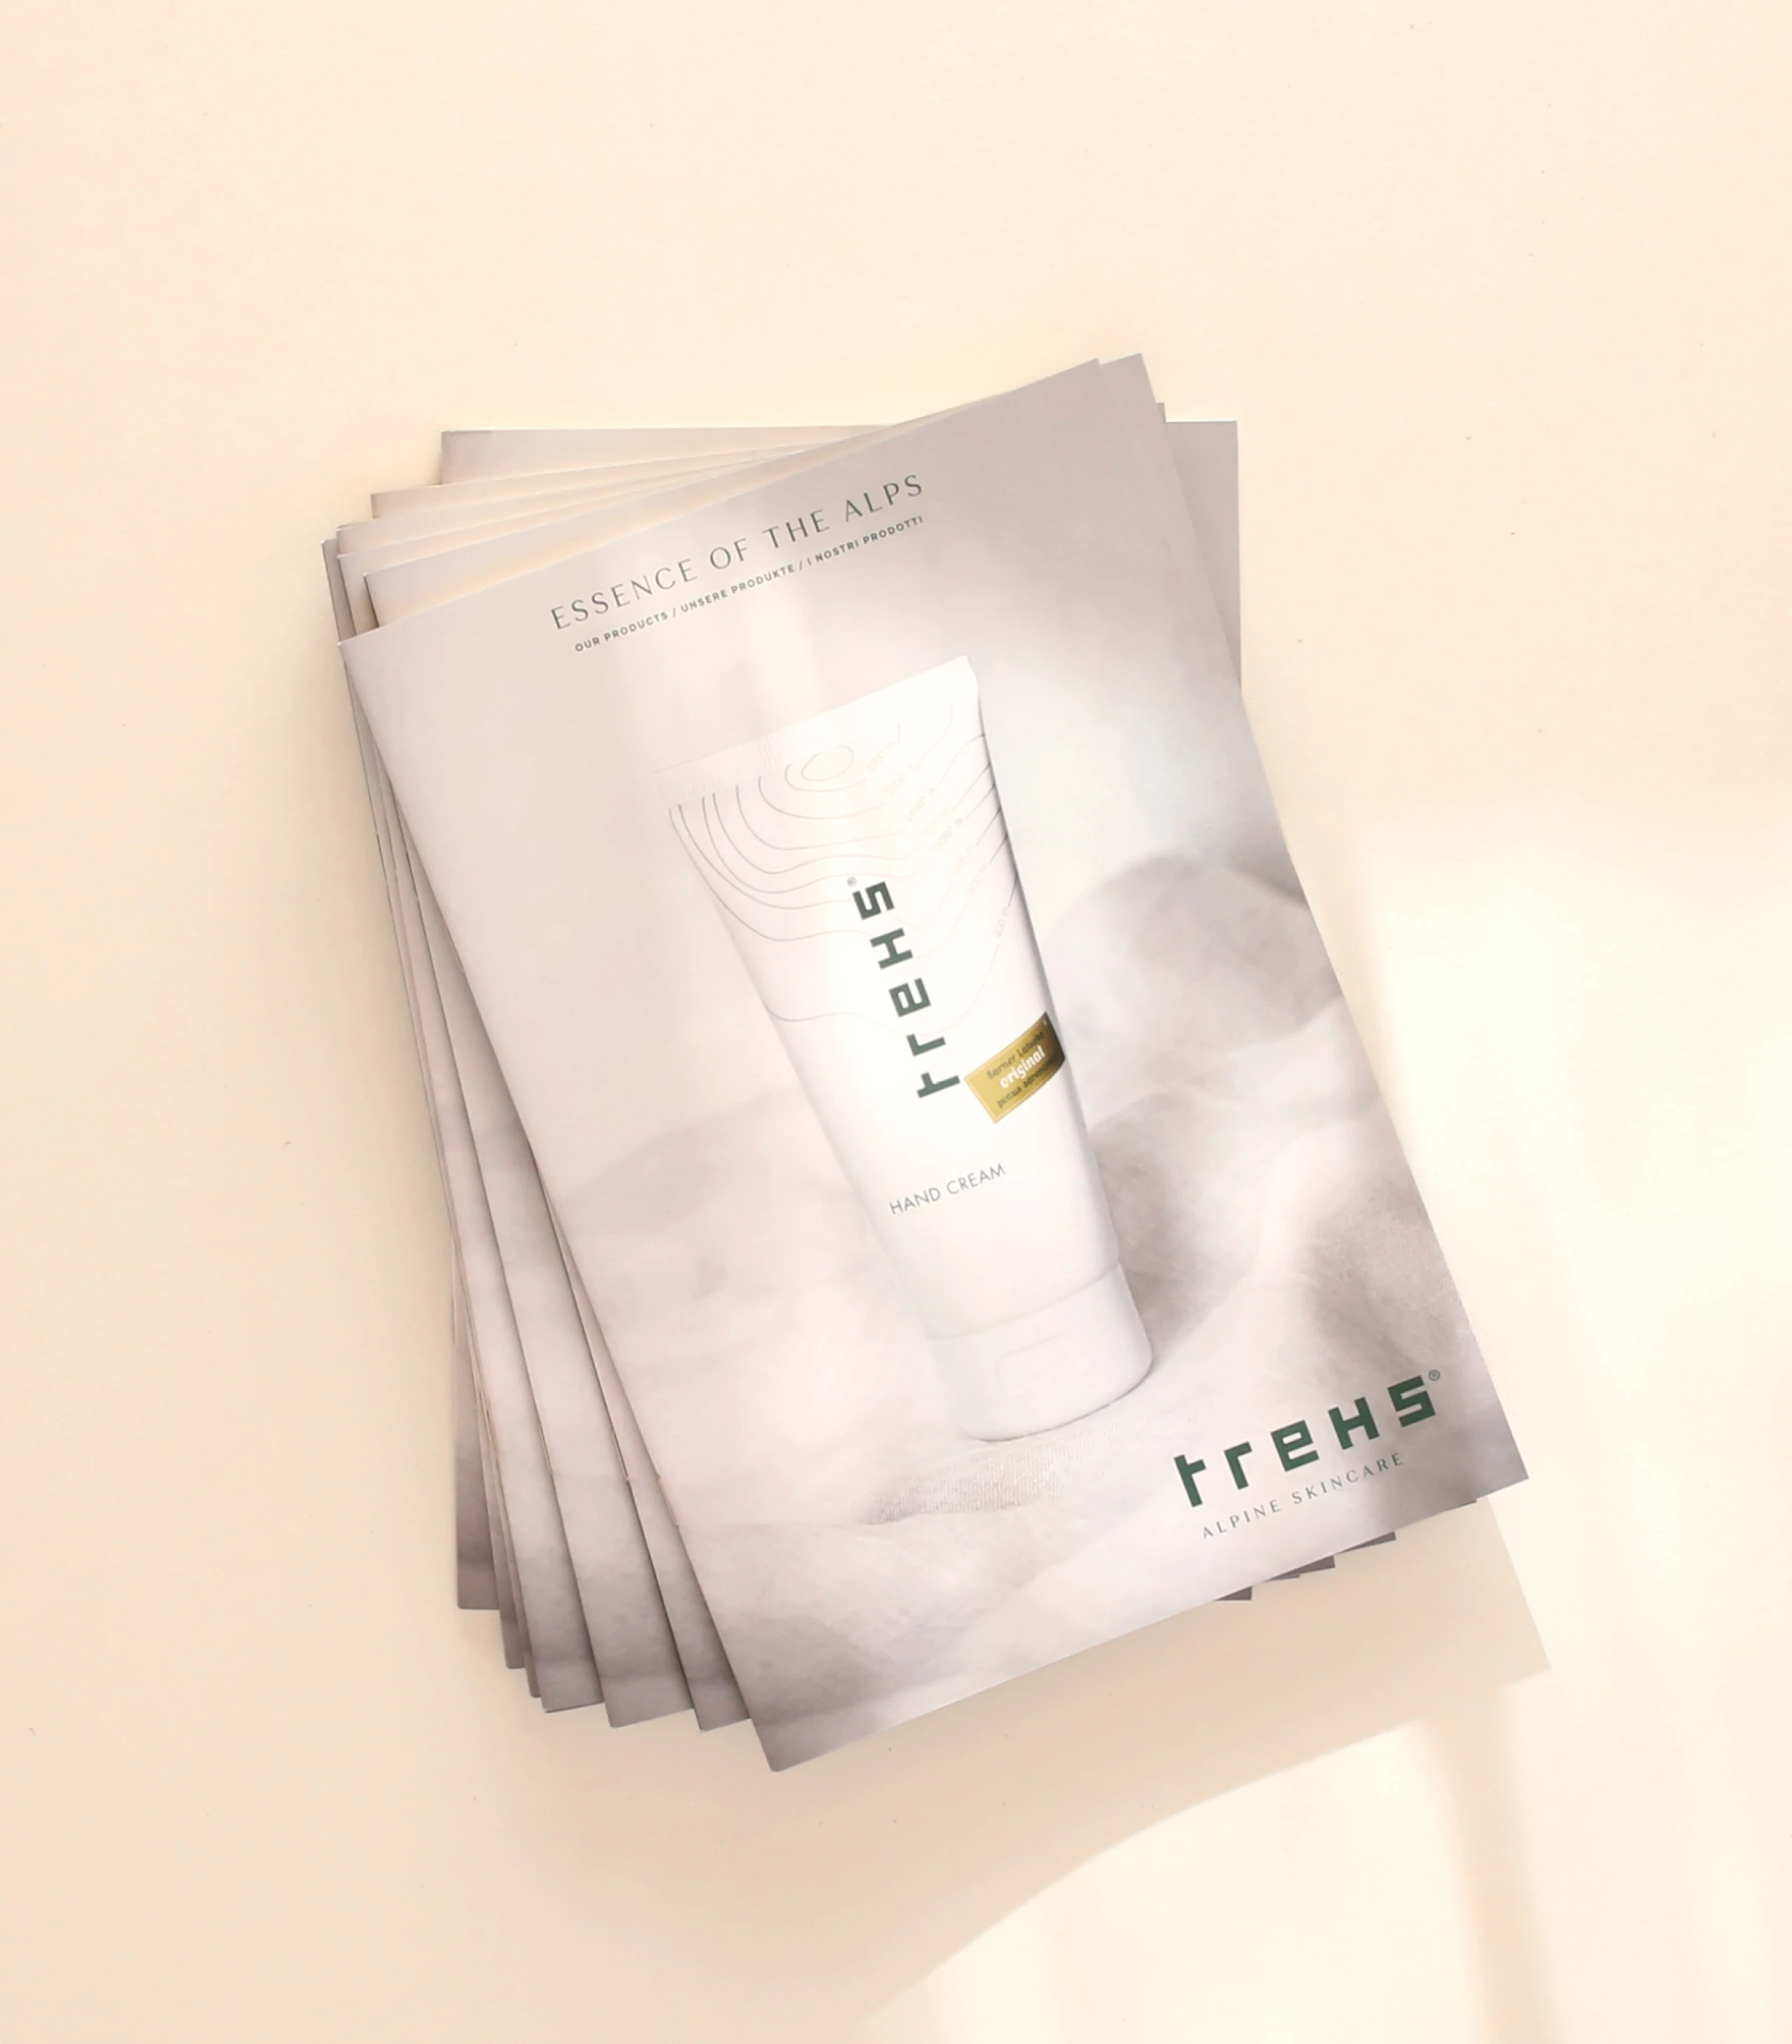 10-trehs-rebranding-communication-brochure-w13.jpg